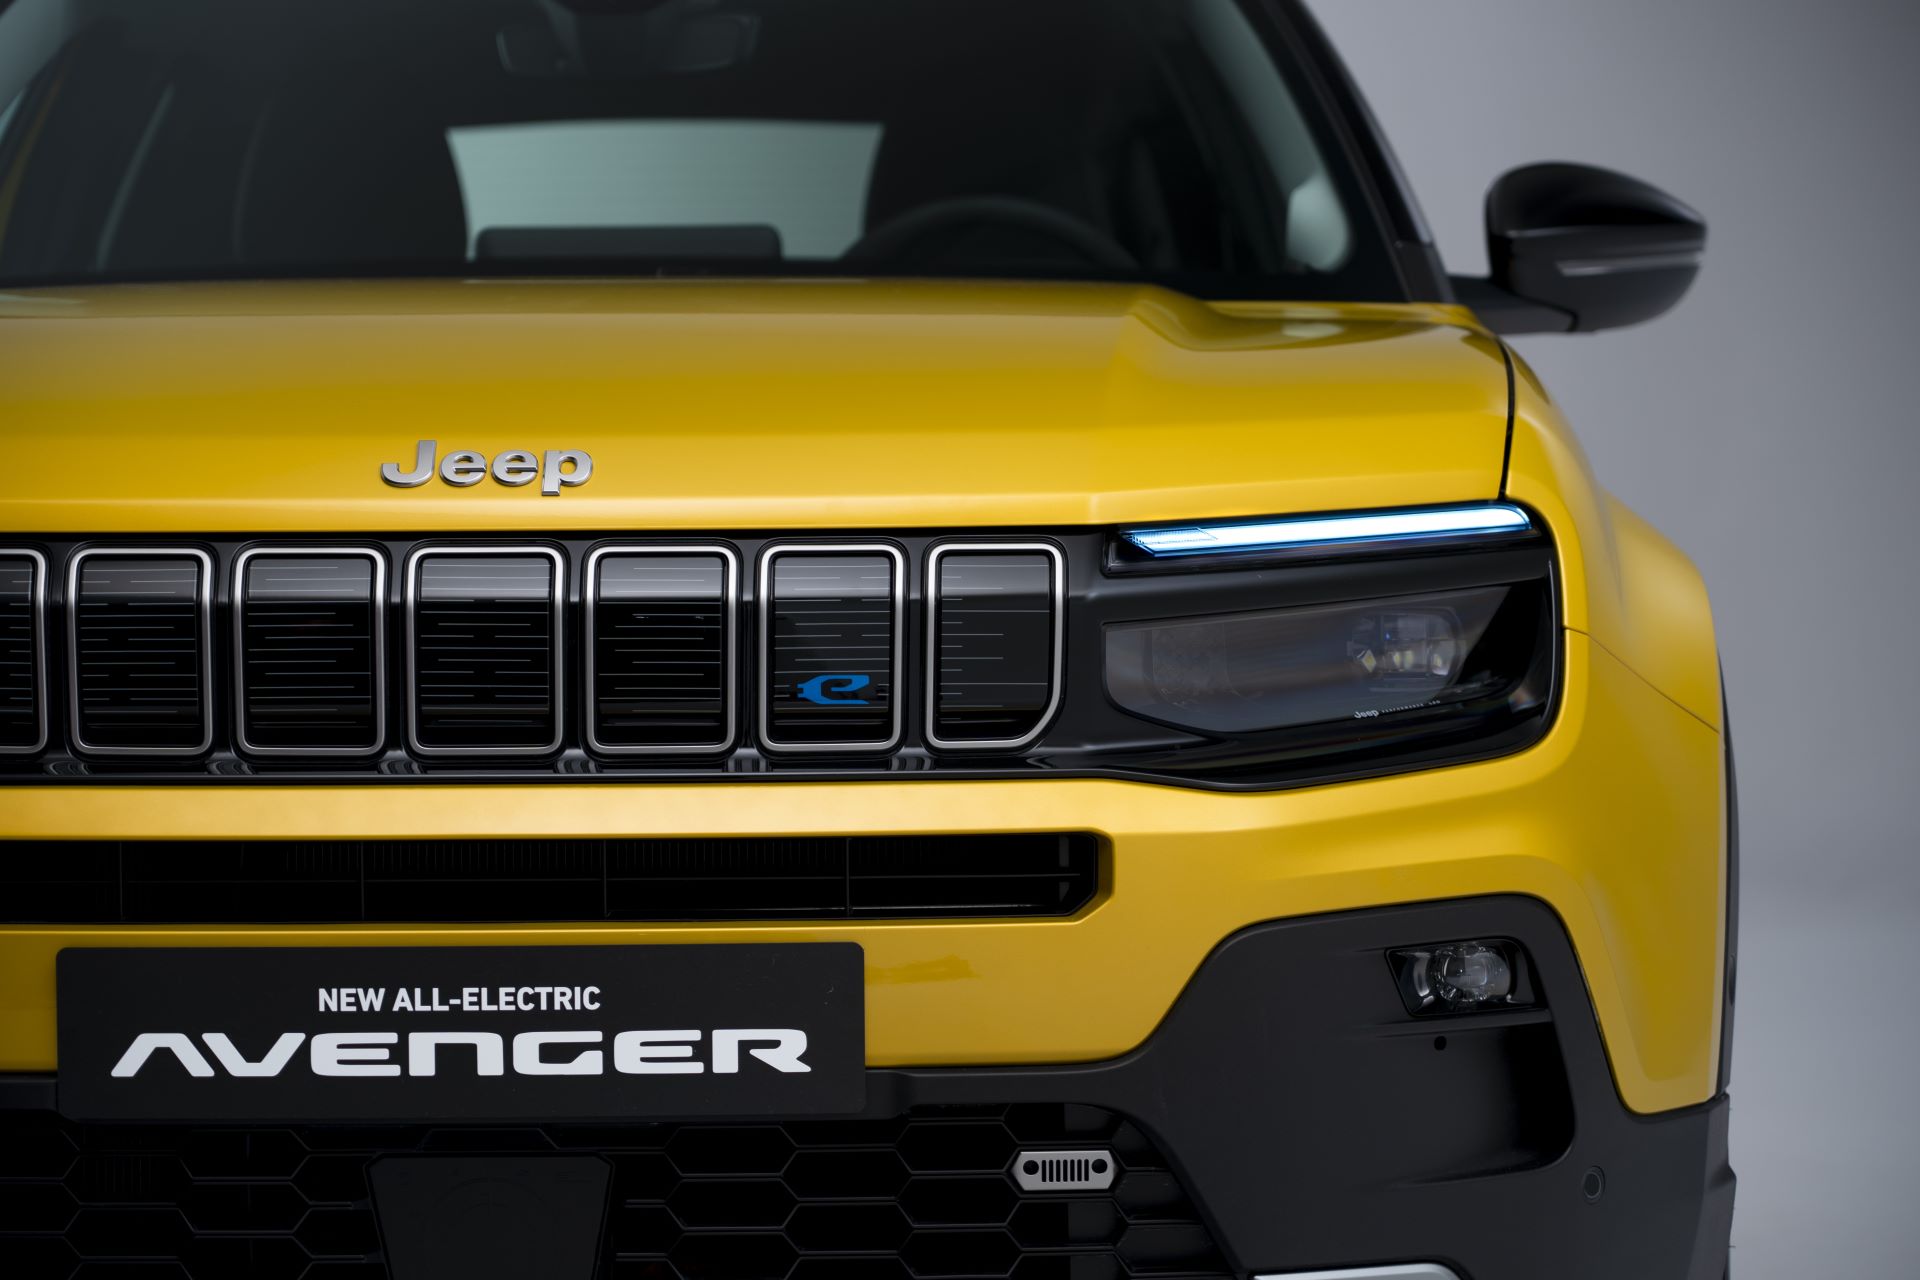 Jeep(R) Avenger